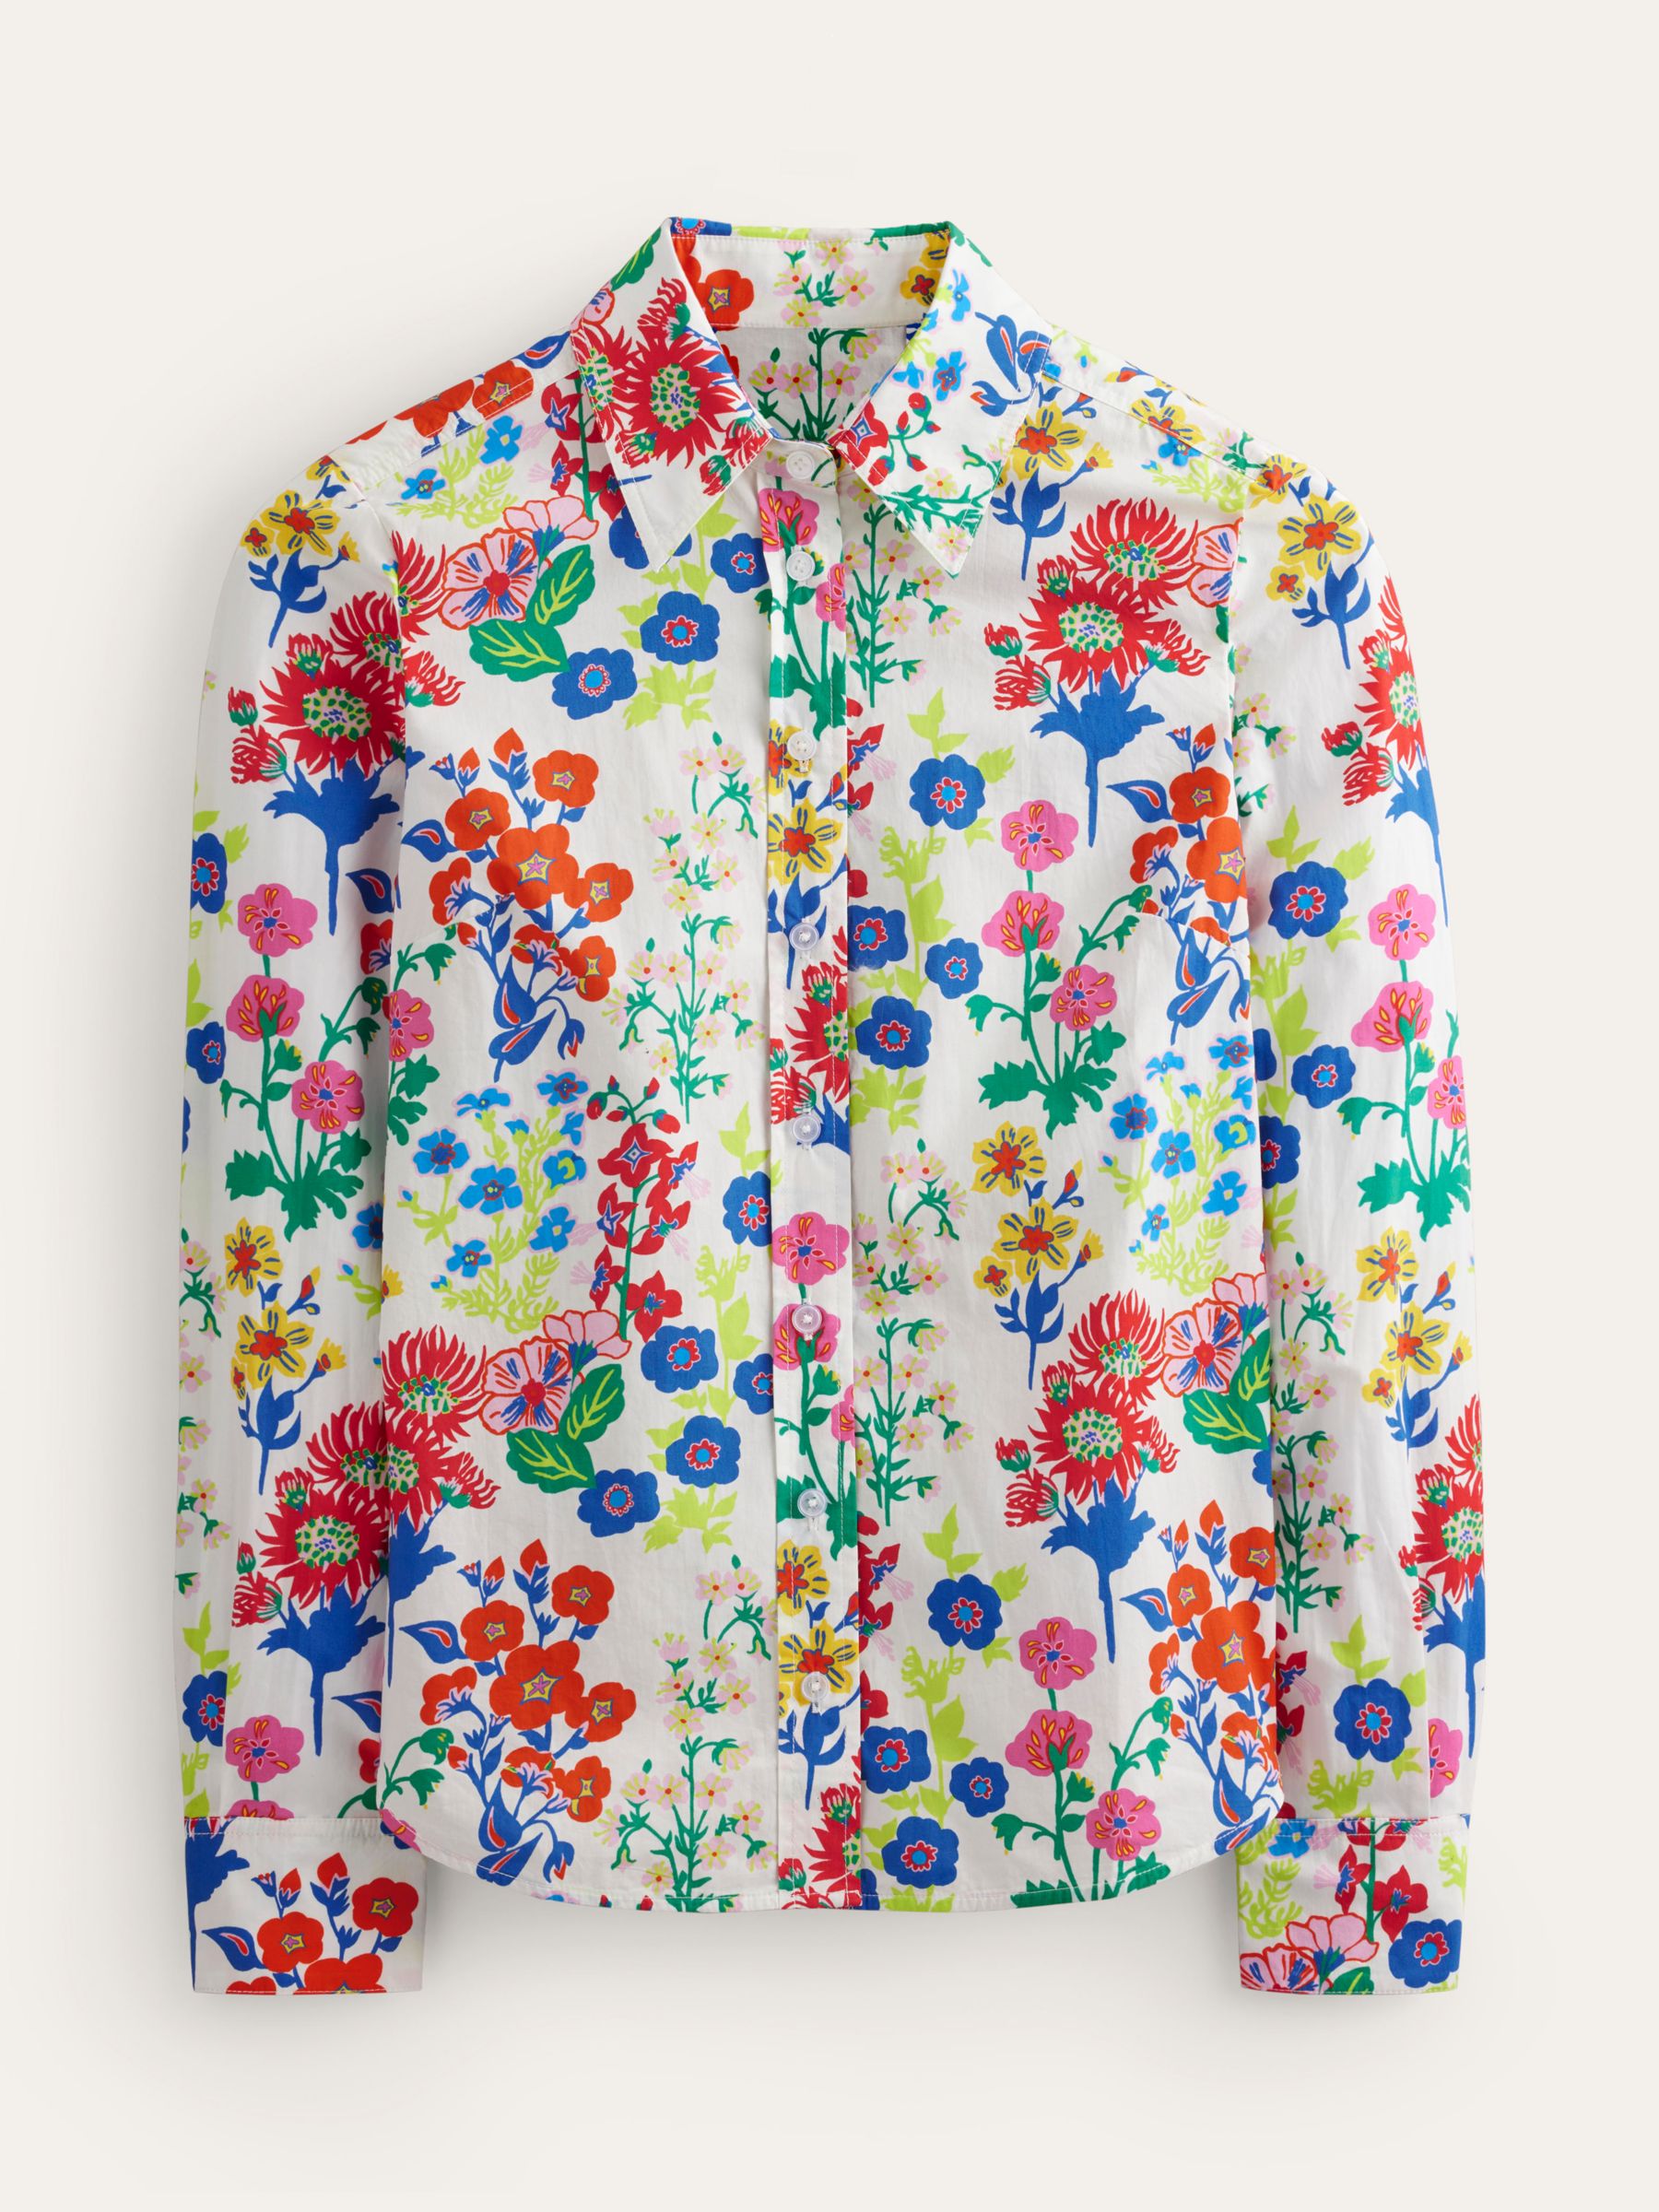 Boden Sienna Floral Print Cotton Shirt, White/Multi, 8